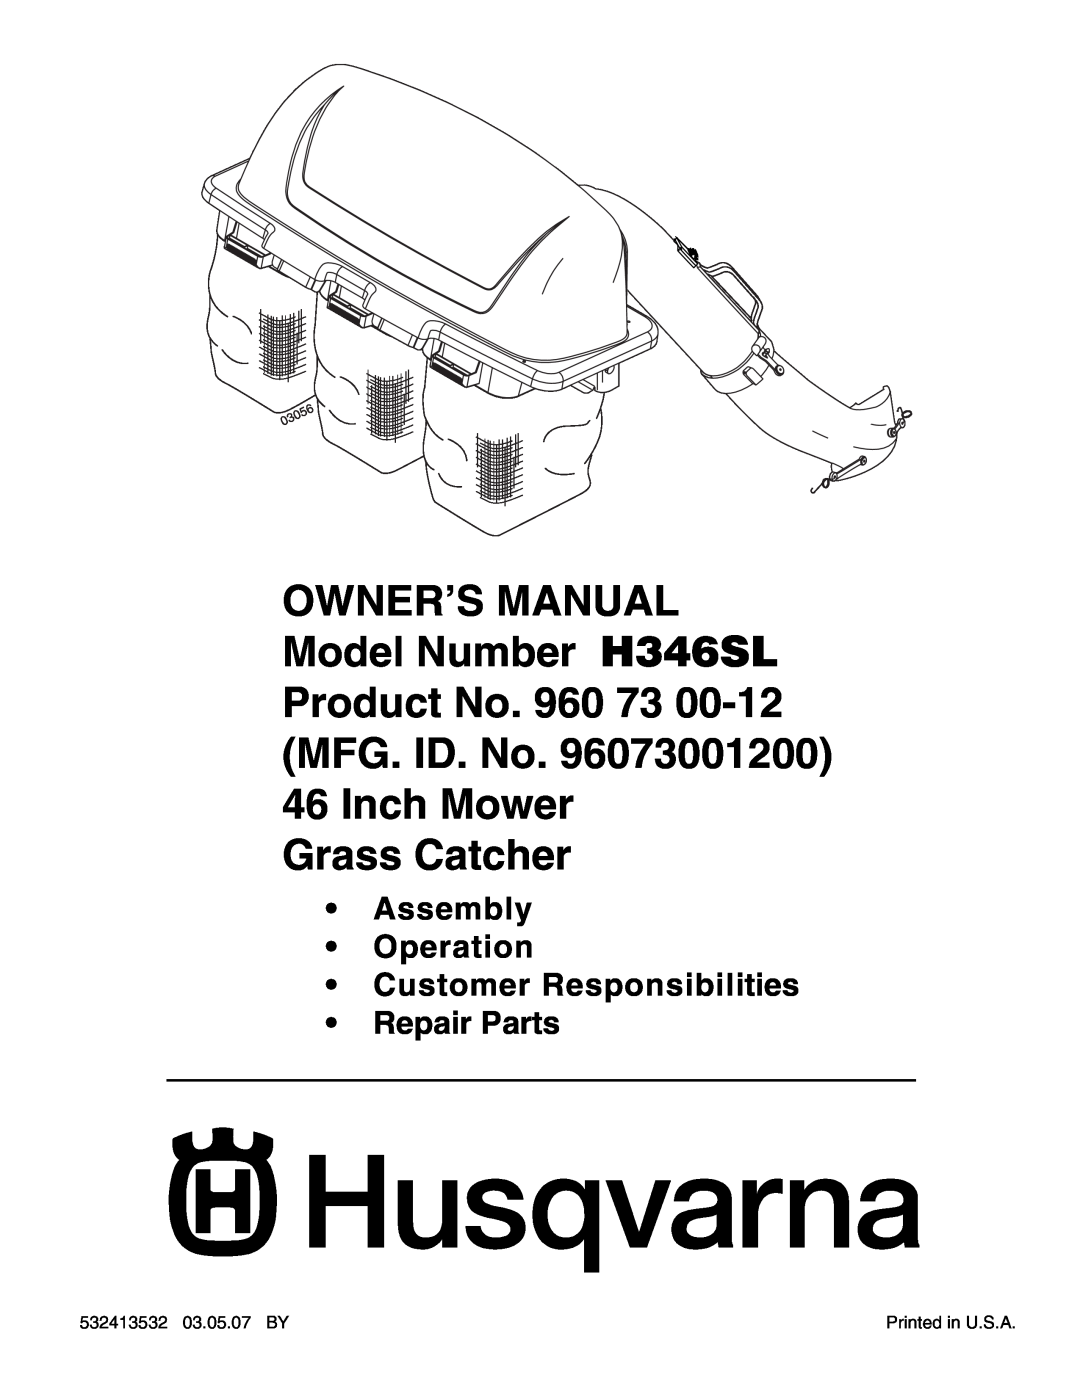 Husqvarna H346SL owner manual Product No. 960 73 MFG. ID. No. 46 Inch Mower, Grass Catcher, Repair Parts 